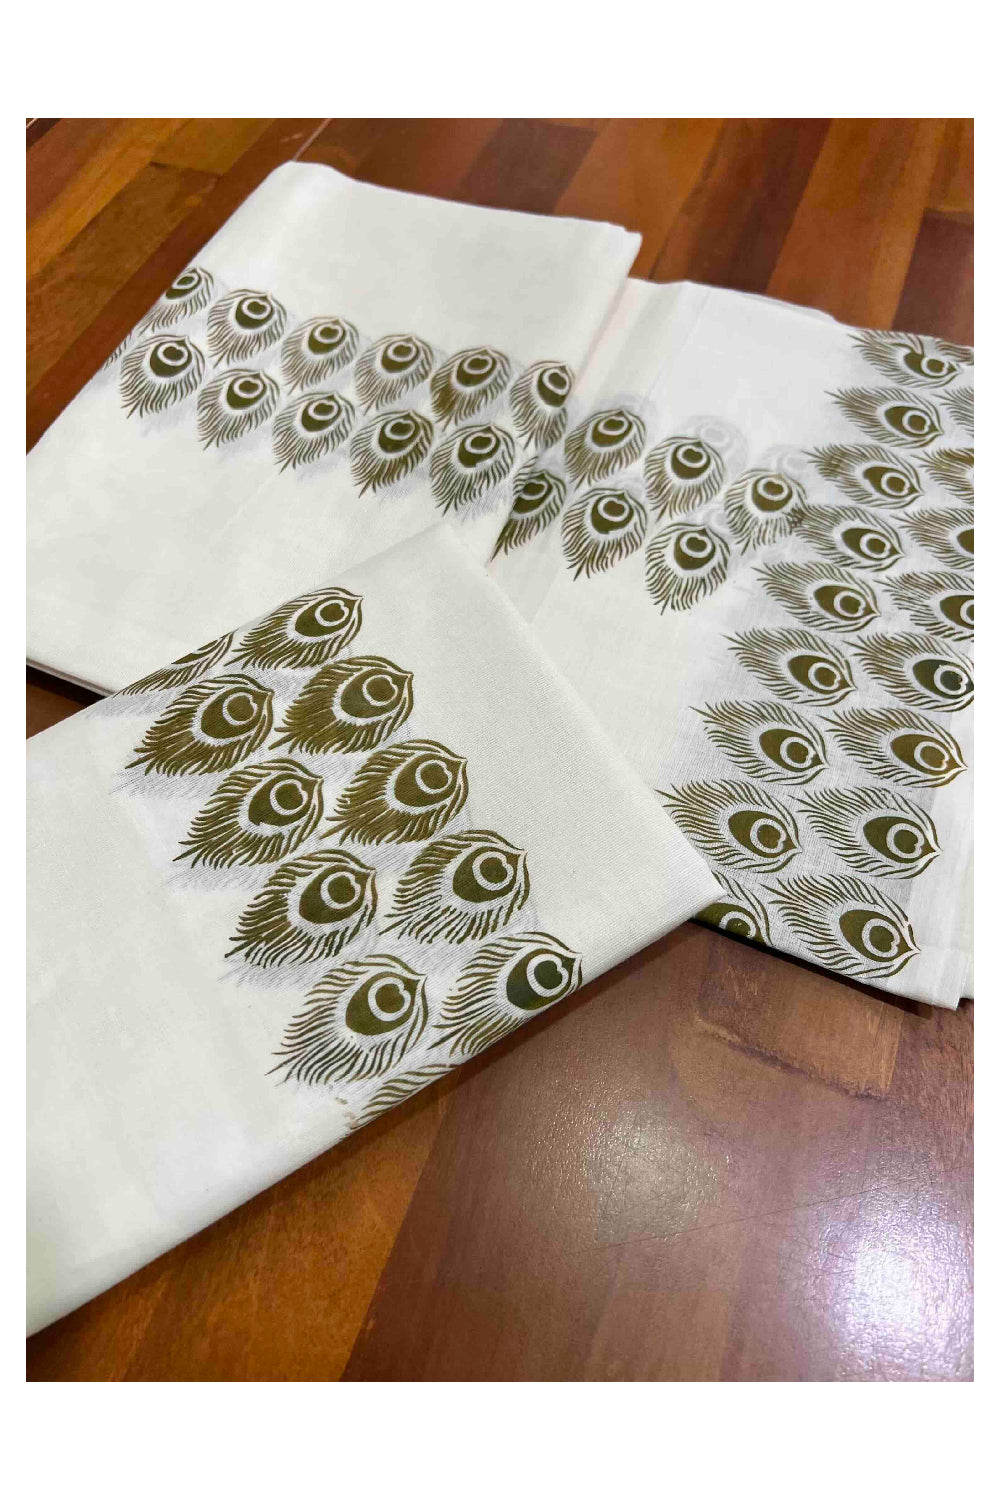 Kerala Cotton Mundum Neriyathum Single (Set Mundu) with Olive Green Feather Block Prints in Border 2.80 Mtrs